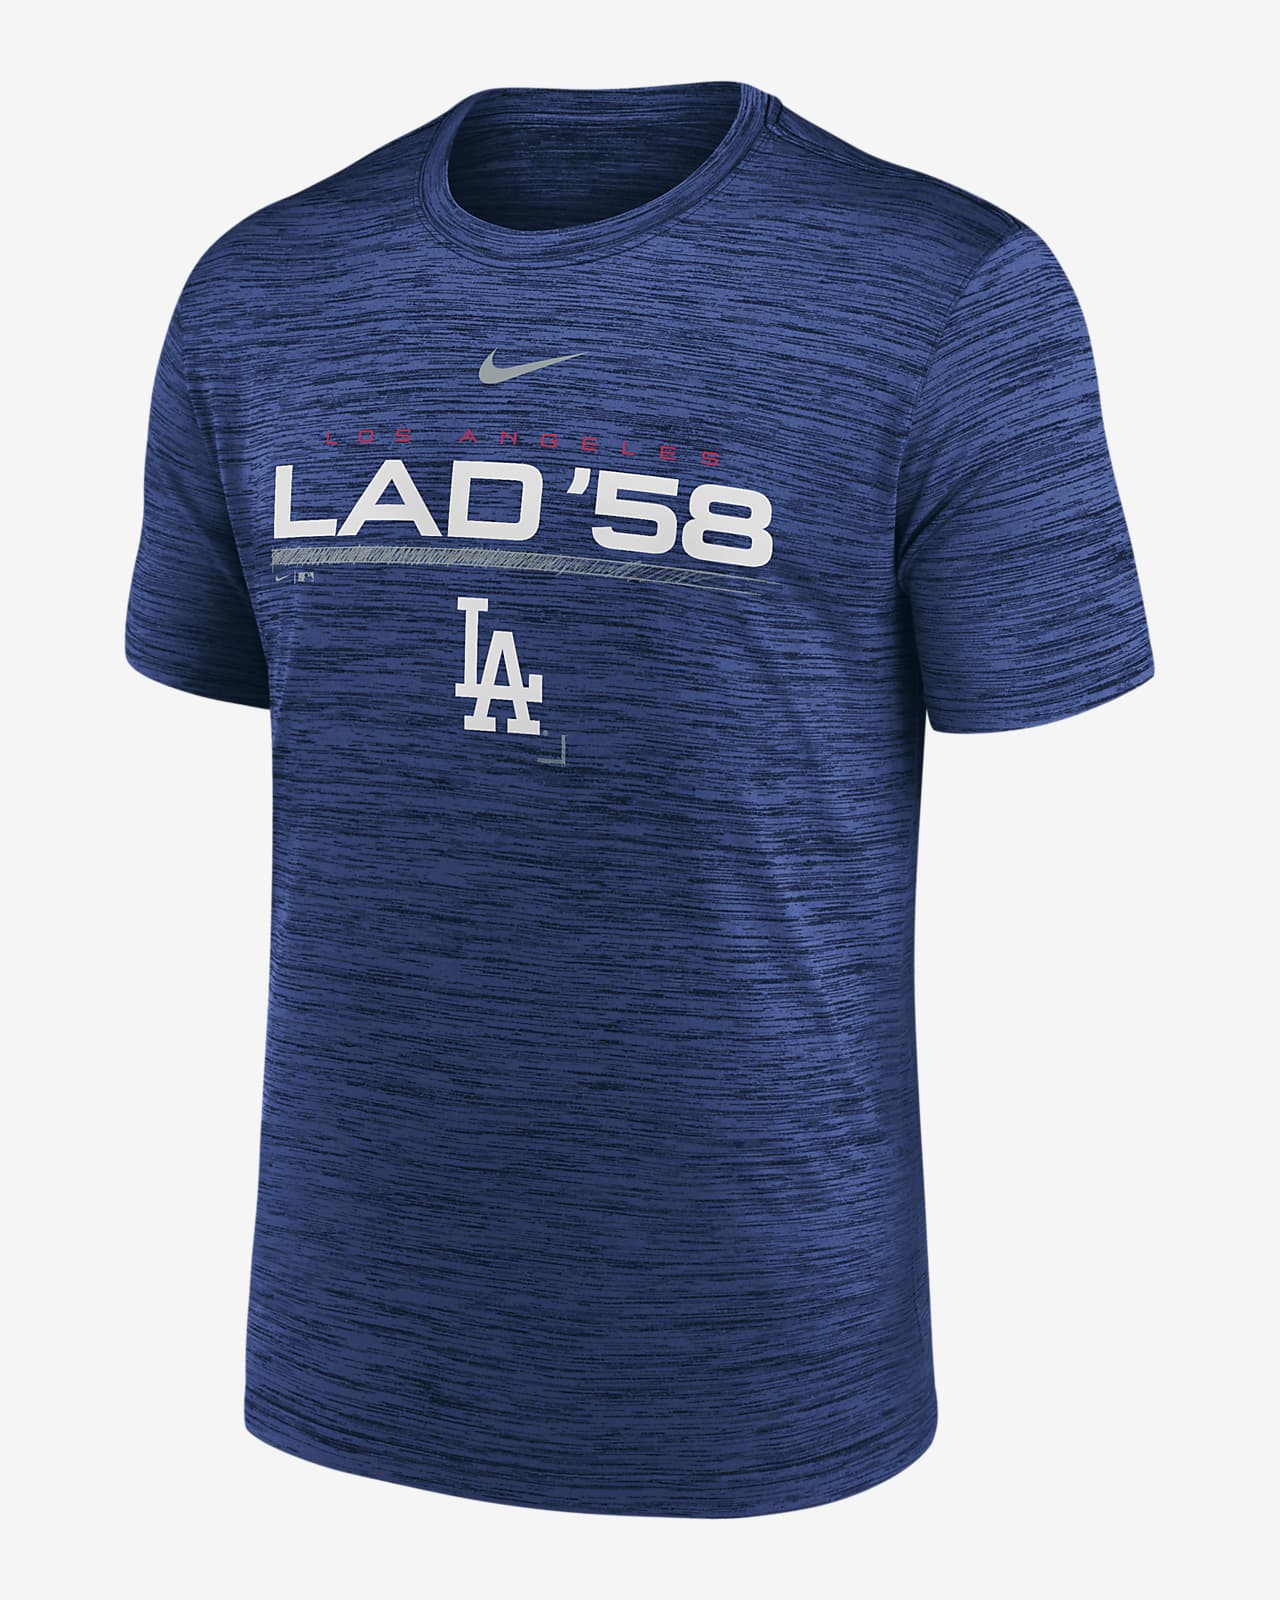 Nike Velocity Team (MLB Los Angeles Dodgers) Men's T-Shirt.